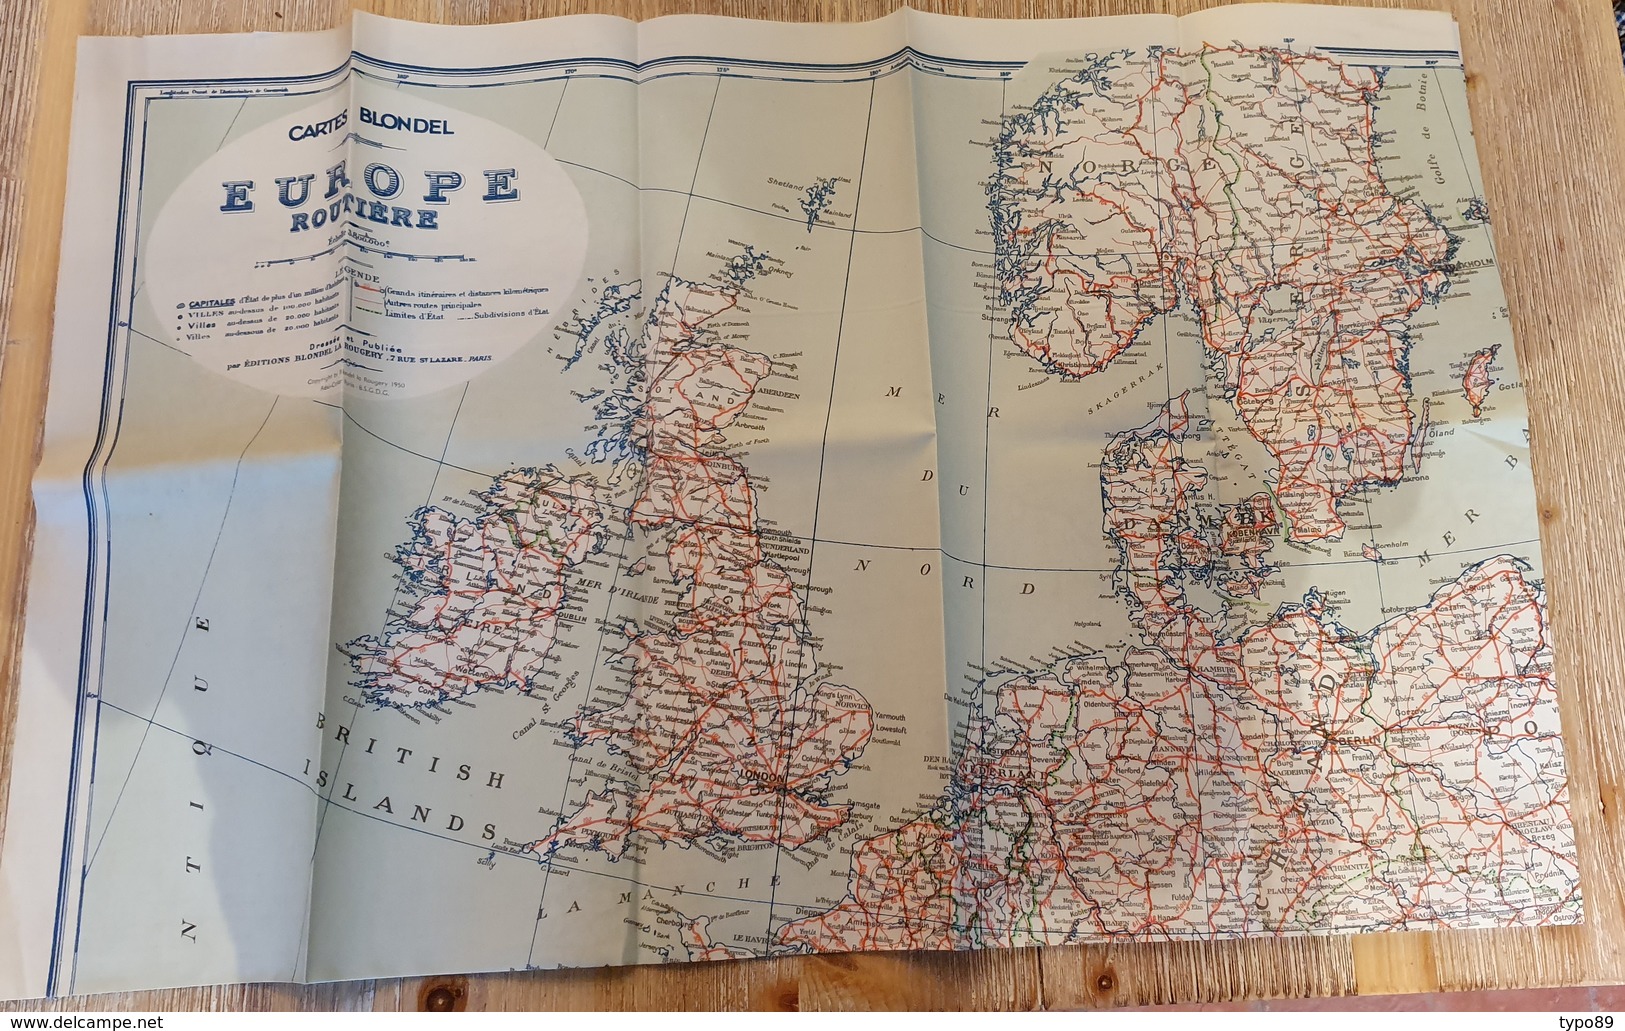 1132 - Carte Europe Routière - 1950 - Plastifiée - 1/380000è - Mappe/Atlanti